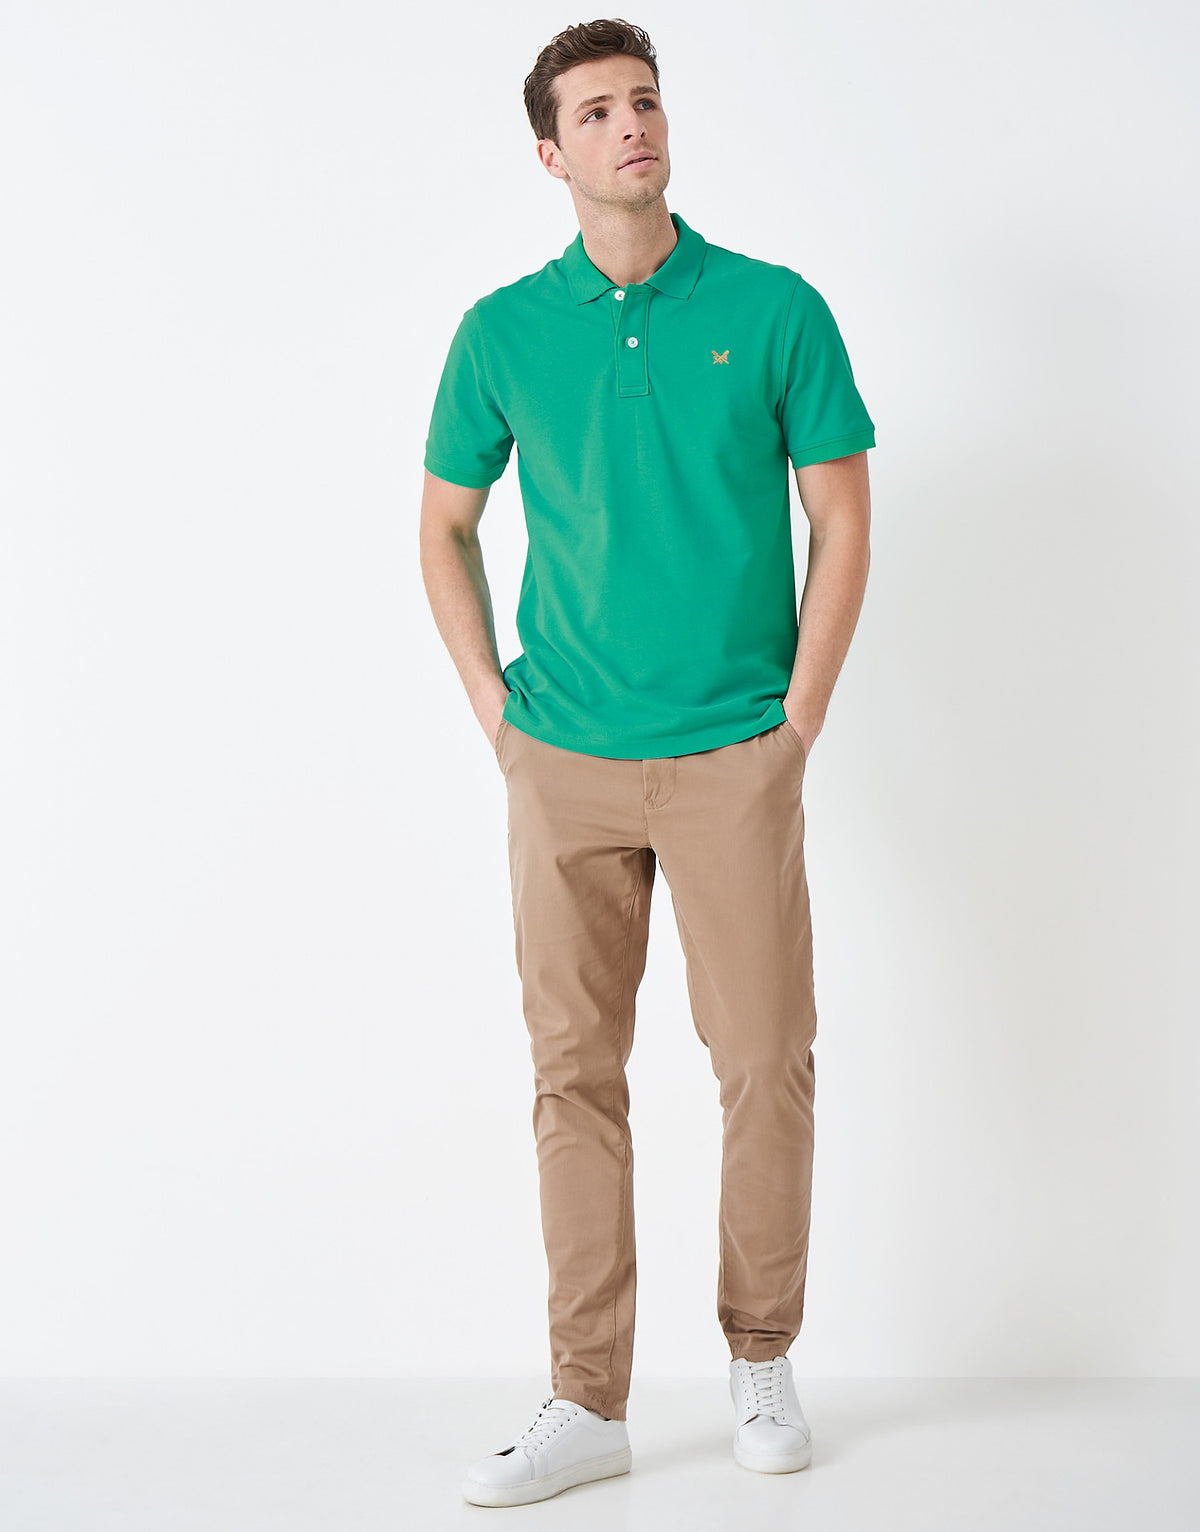 Crew Clothing Mens Pique Polo Shirt 'Classic Pique Polo' - Short Sleeved, 03, Mke002, Arcadia Green